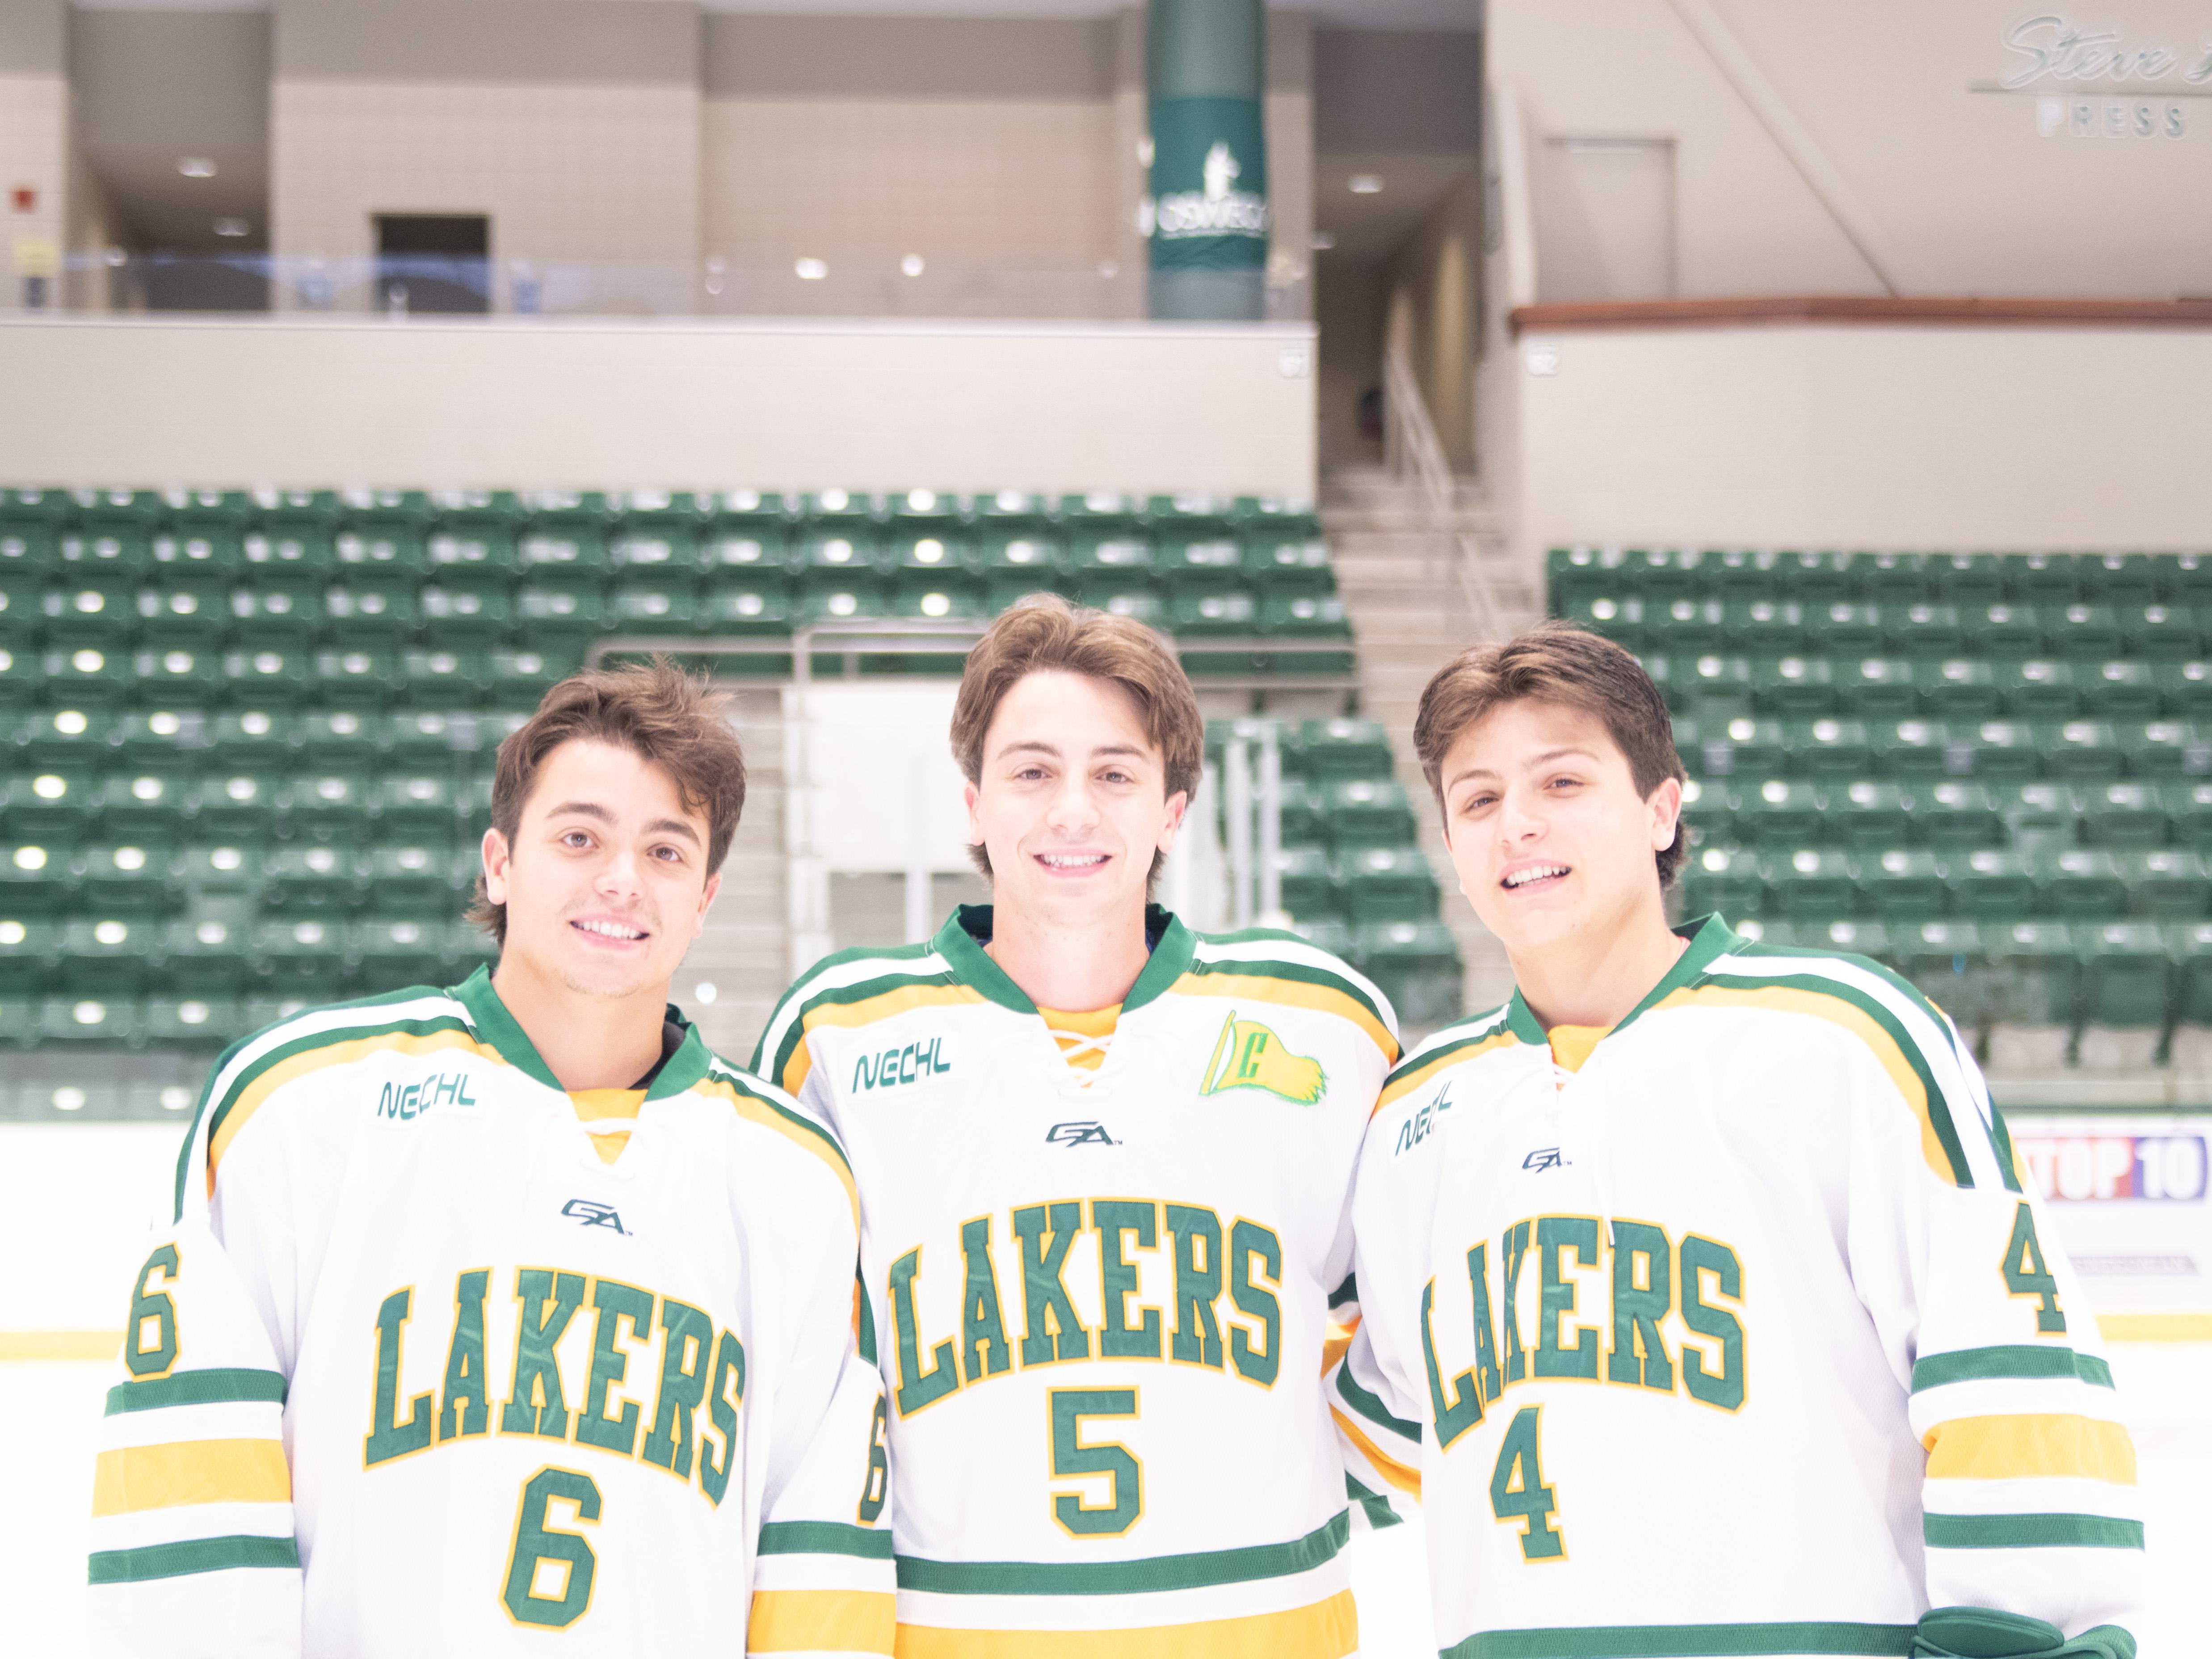 Matthew, Andrew, and Nicholas Cardi pose in hockey jerseys